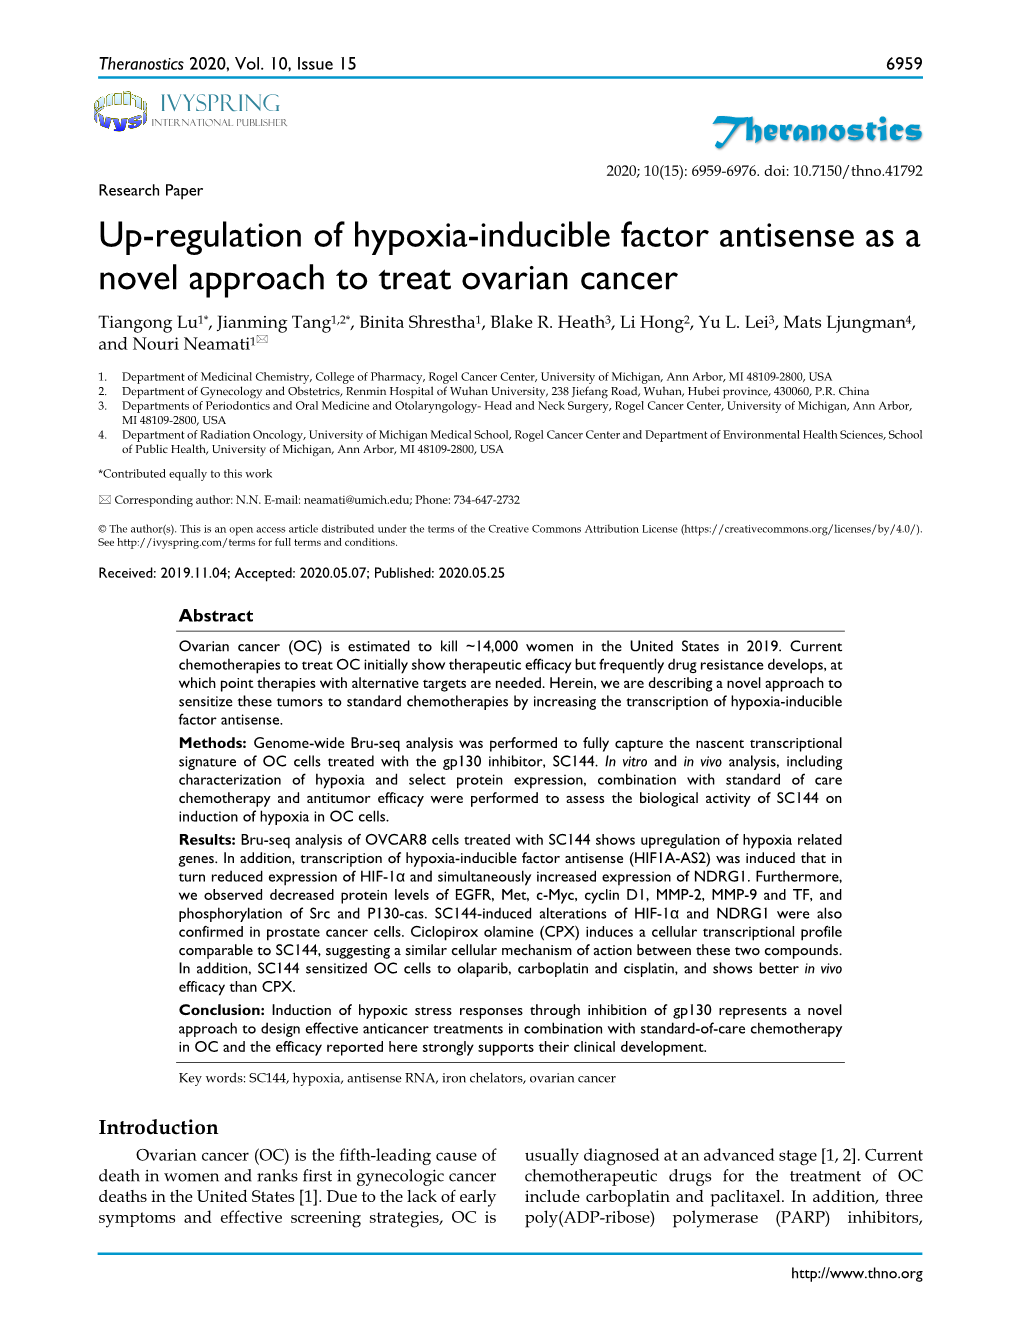 Up-Regulation of Hypoxia-Inducible Factor Antisense As a Novel Approach to Treat Ovarian Cancer Tiangong Lu1*, Jianming Tang1,2*, Binita Shrestha1, Blake R